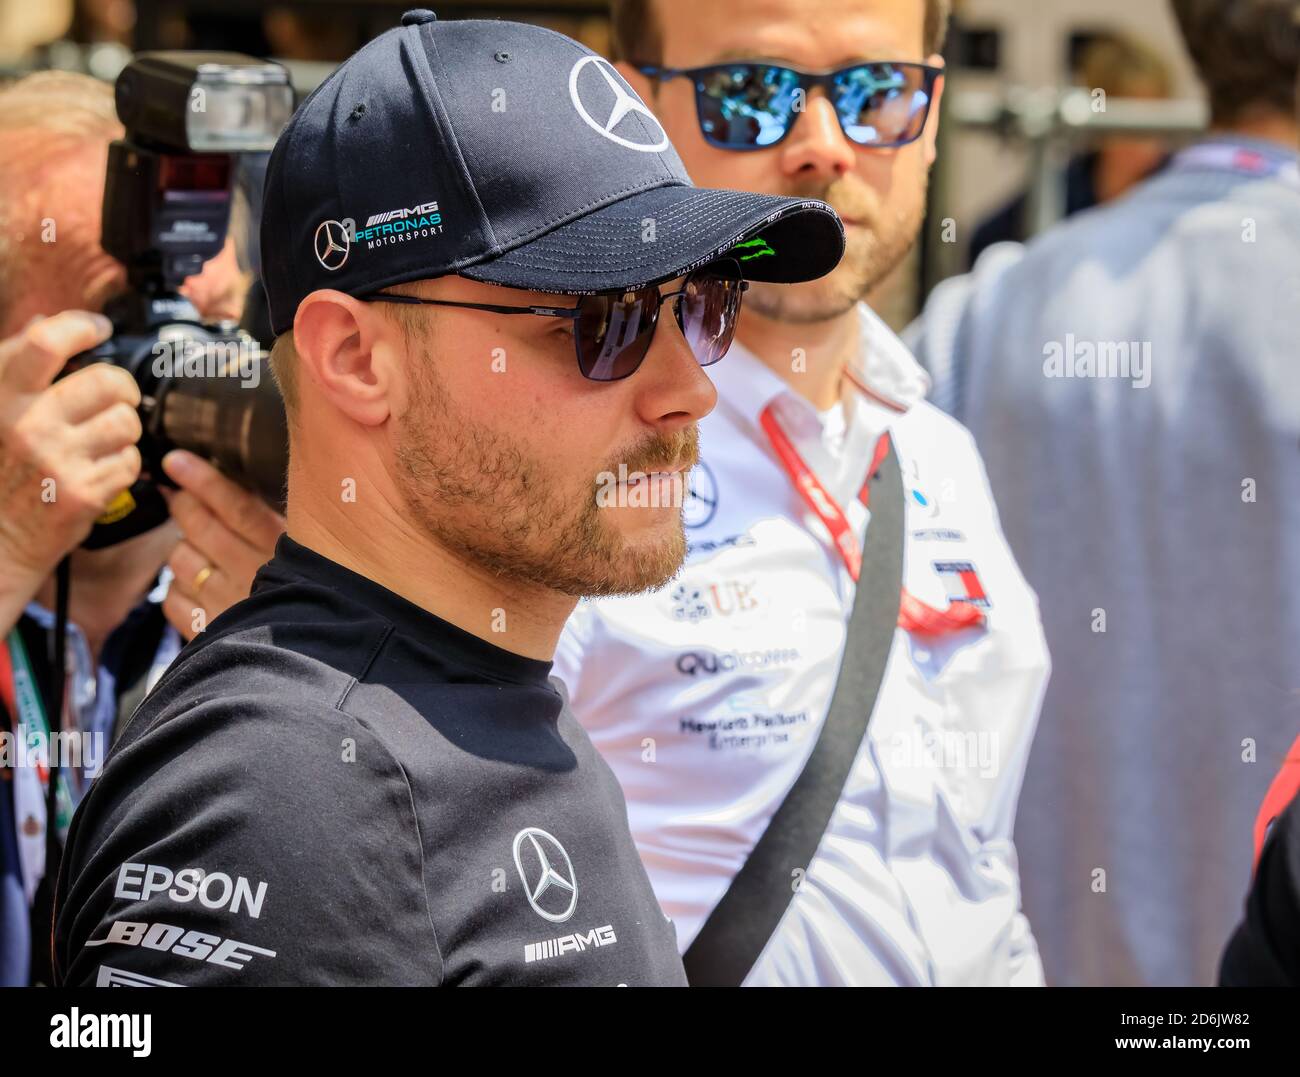 Monte Carlo, Monaco - May 24, 2019: Mercedes Petronas Formula One racing driver Valtteri Bottas at the F1 Grand Prix race fan event Stock Photo